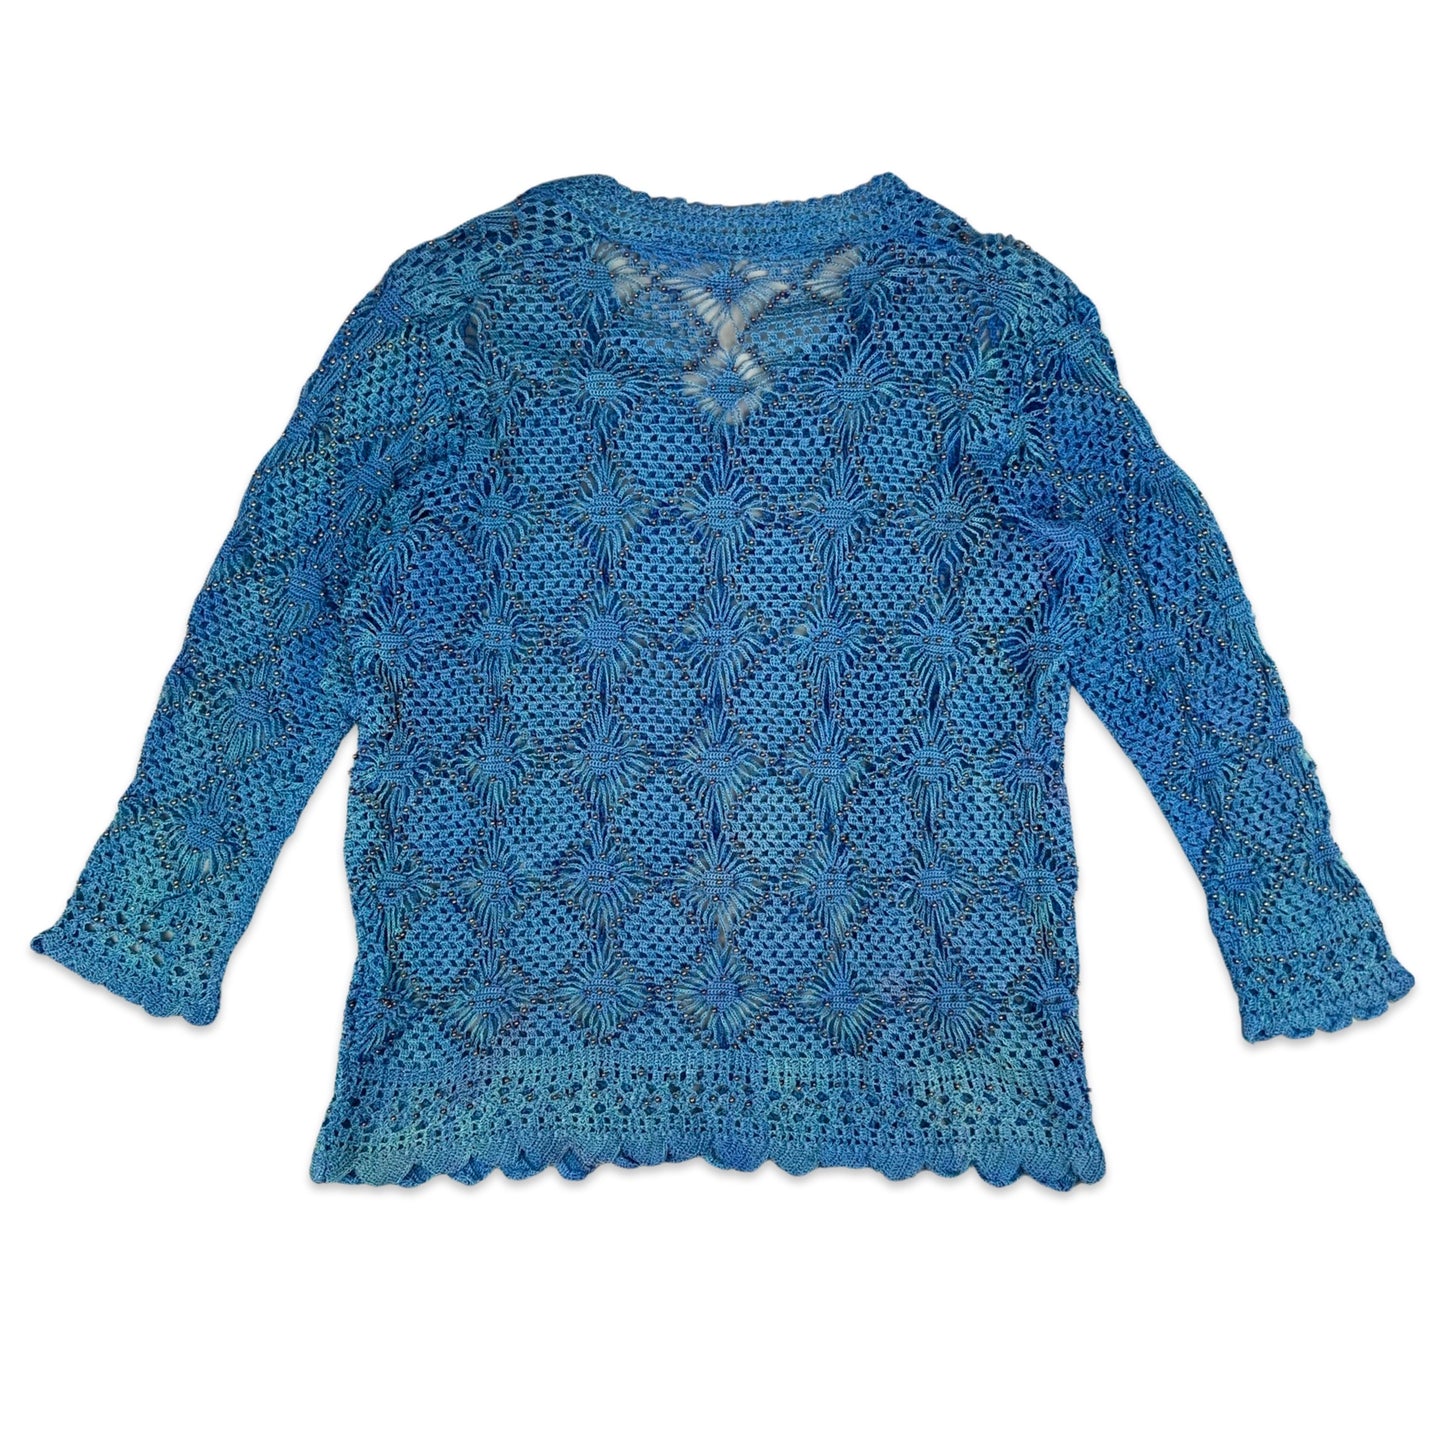 Vintage Blue Gold Crochet Sheer Tunic Top Dress